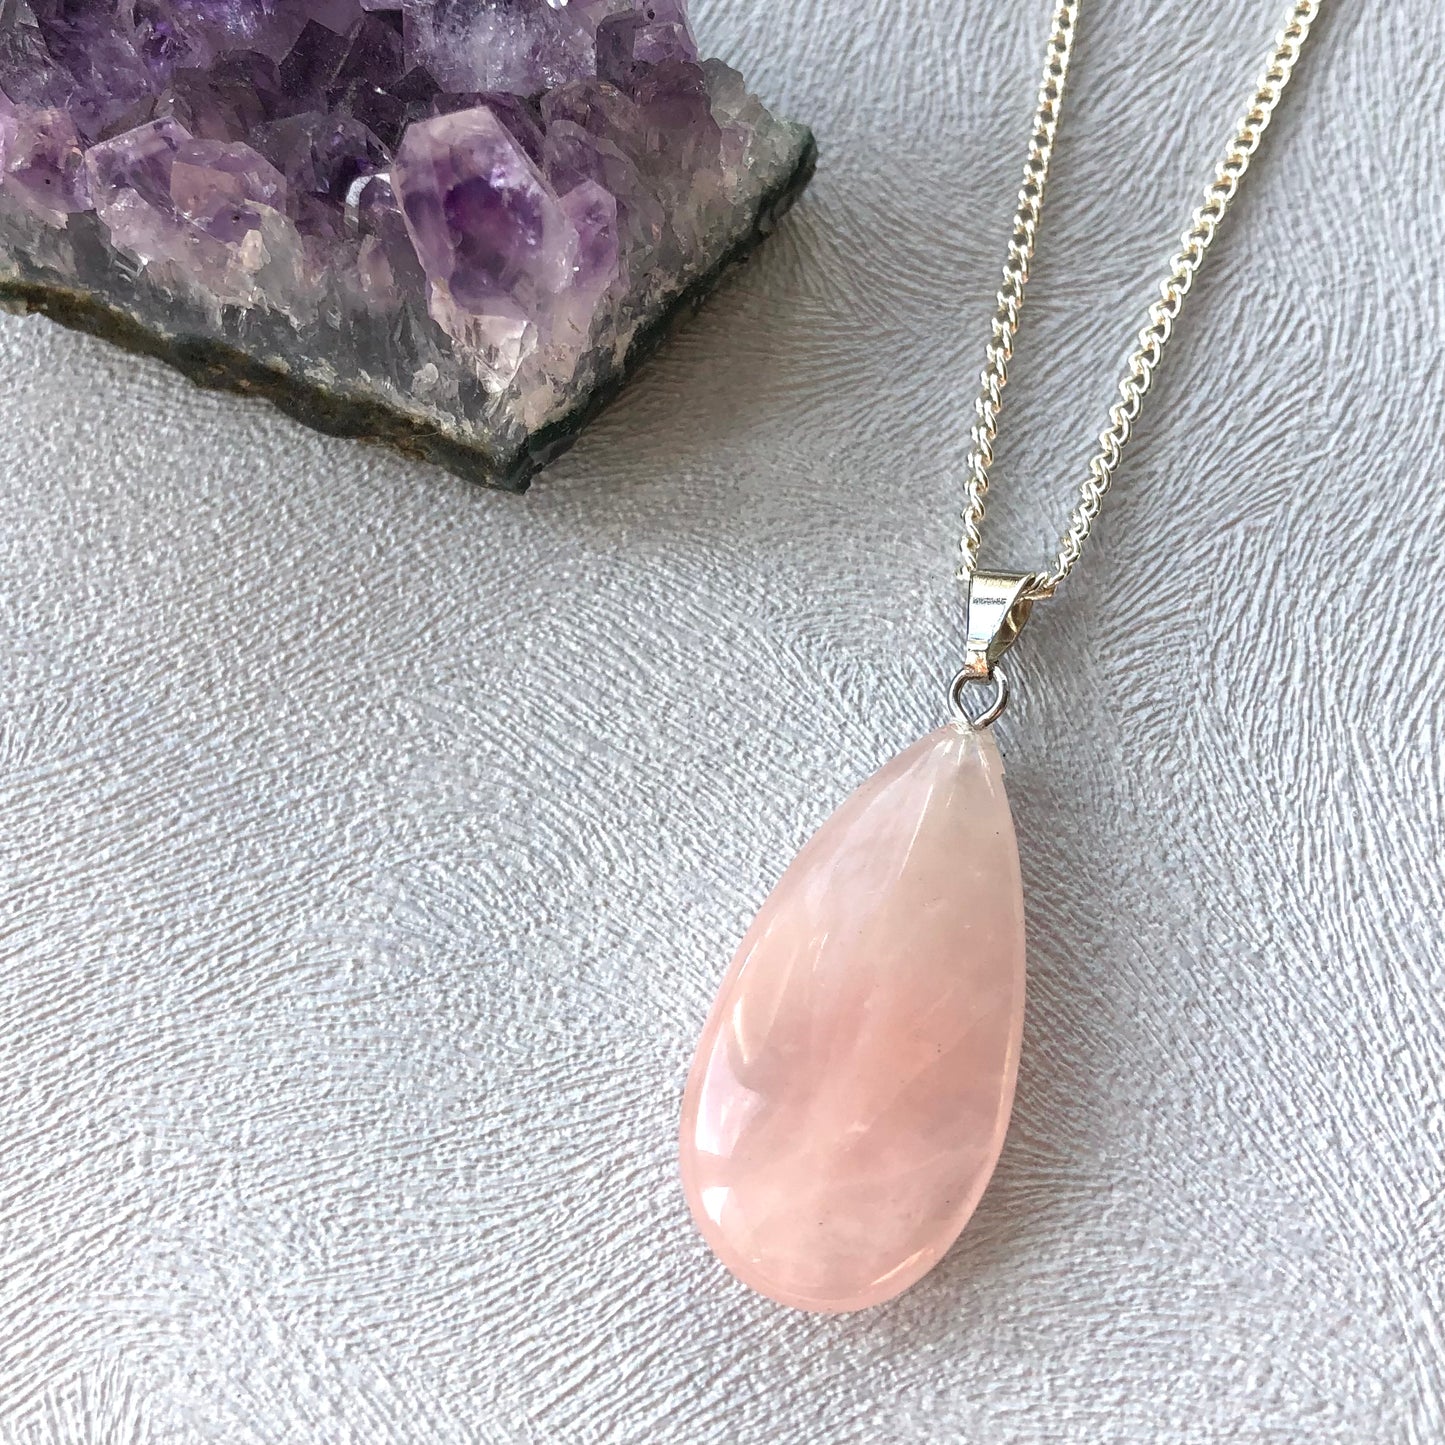 Tiny rose quartz worry stone pendant